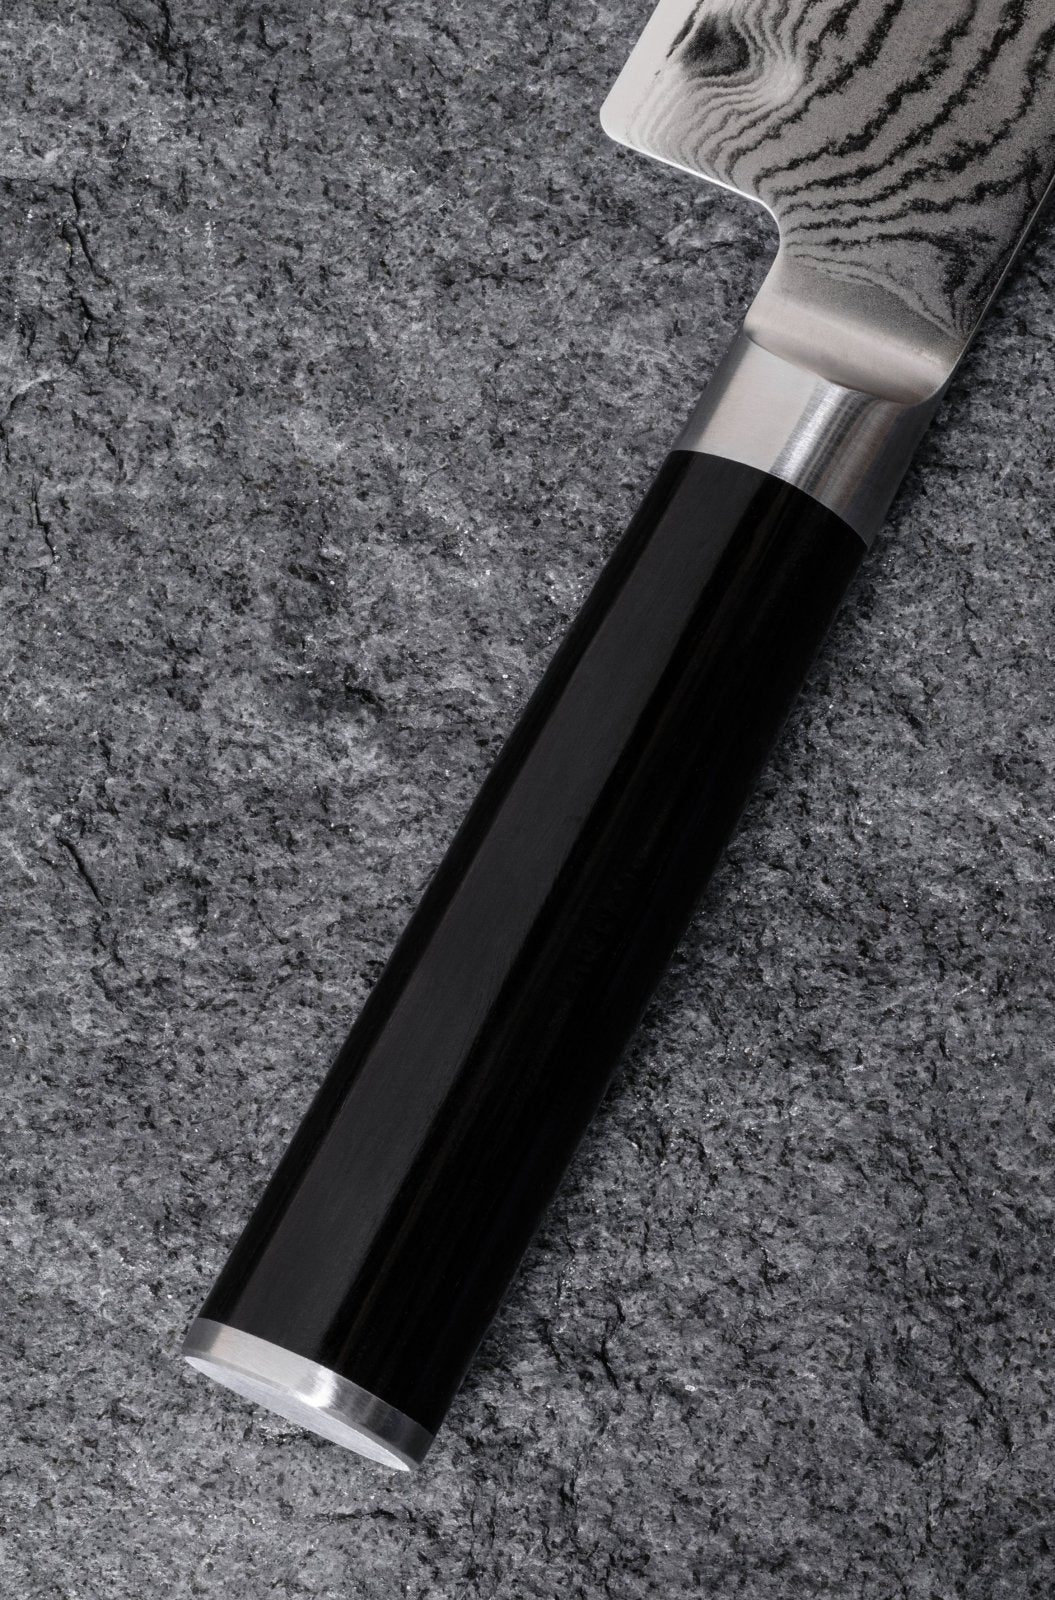 KAI Shun 23cm Slicing Knife - KAI-DM-0704 - The Cotswold Knife Company